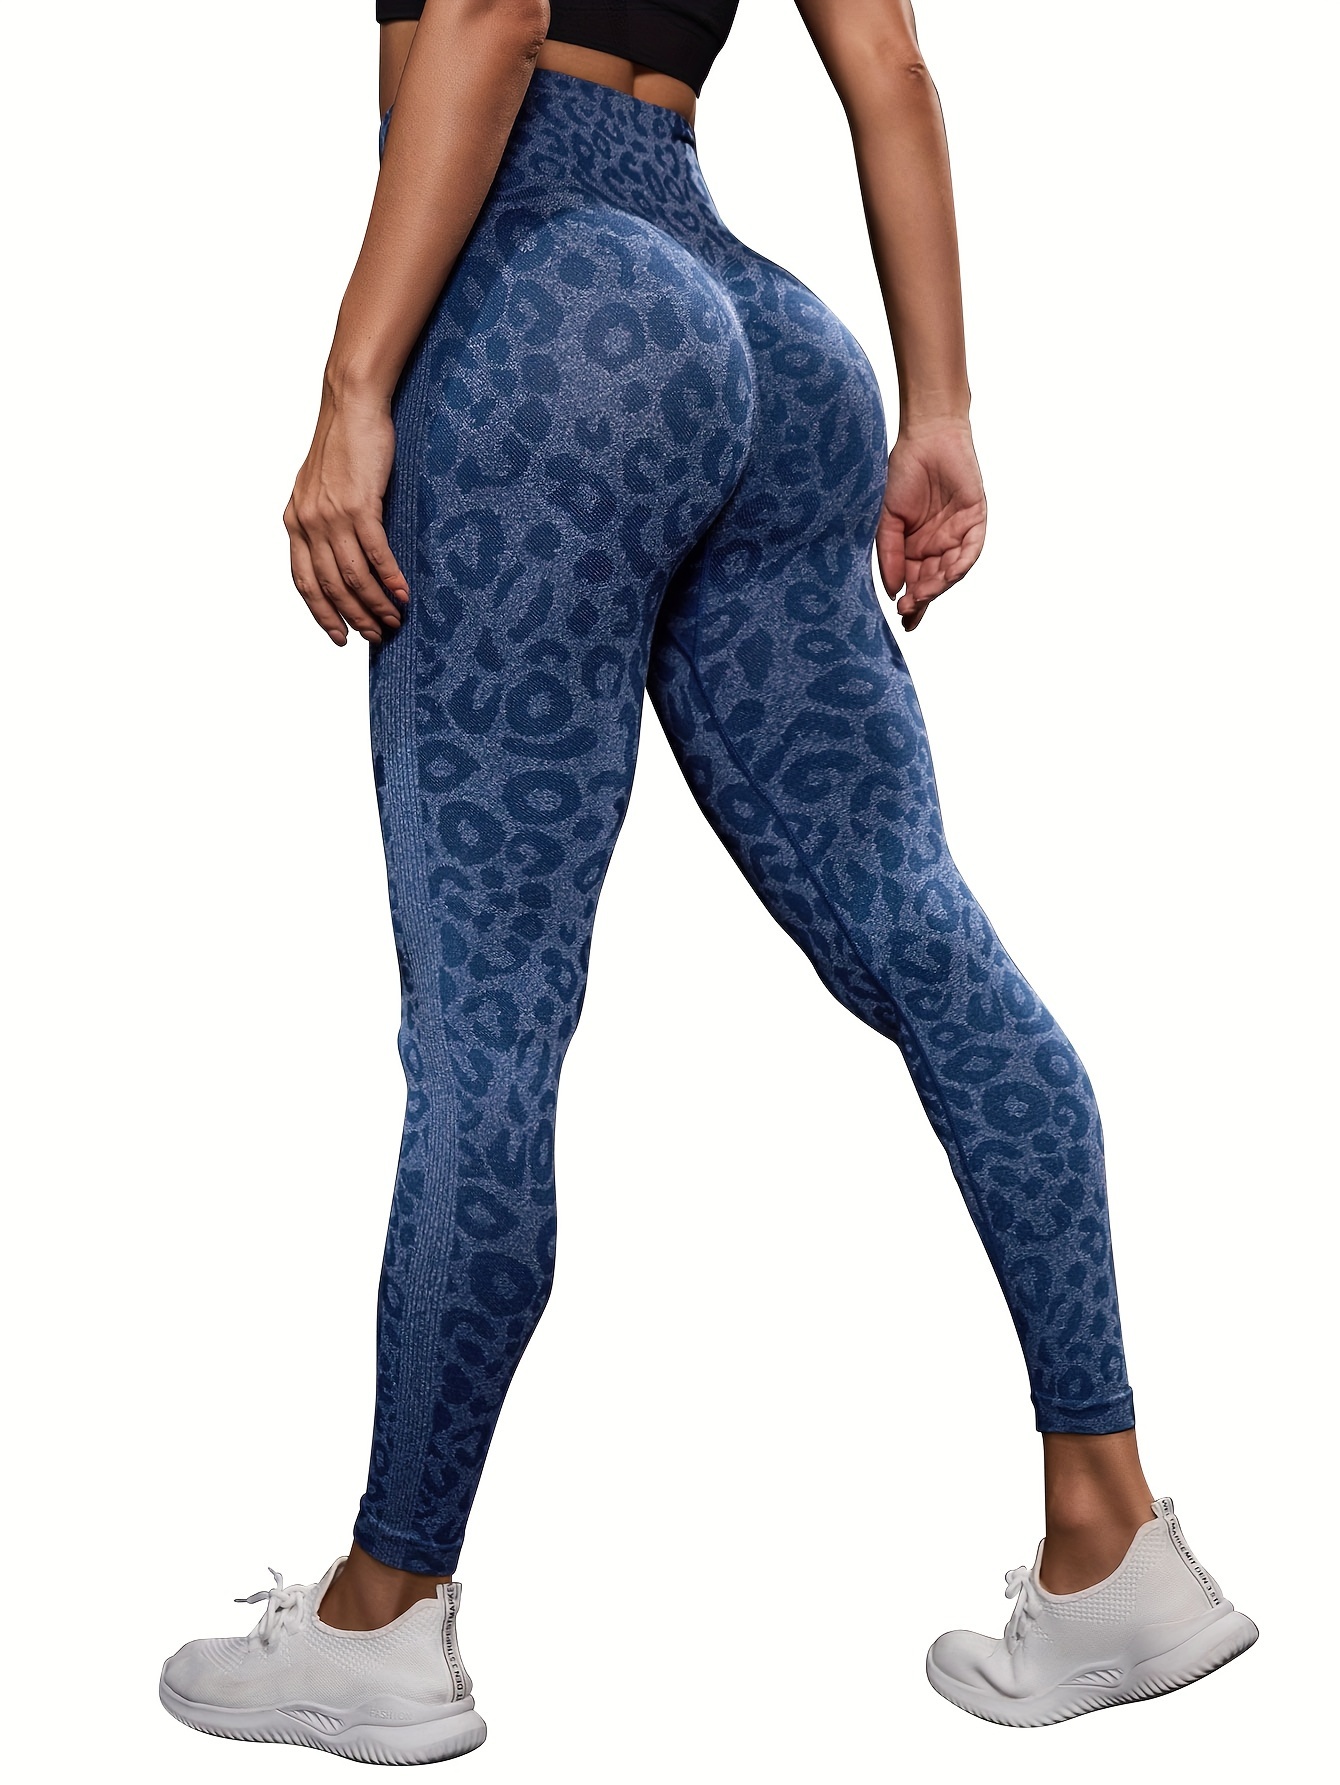 Jaguar Design Yoga Pant Workout Leopard Legging Slim Sexy Pushup High Waist  Butt